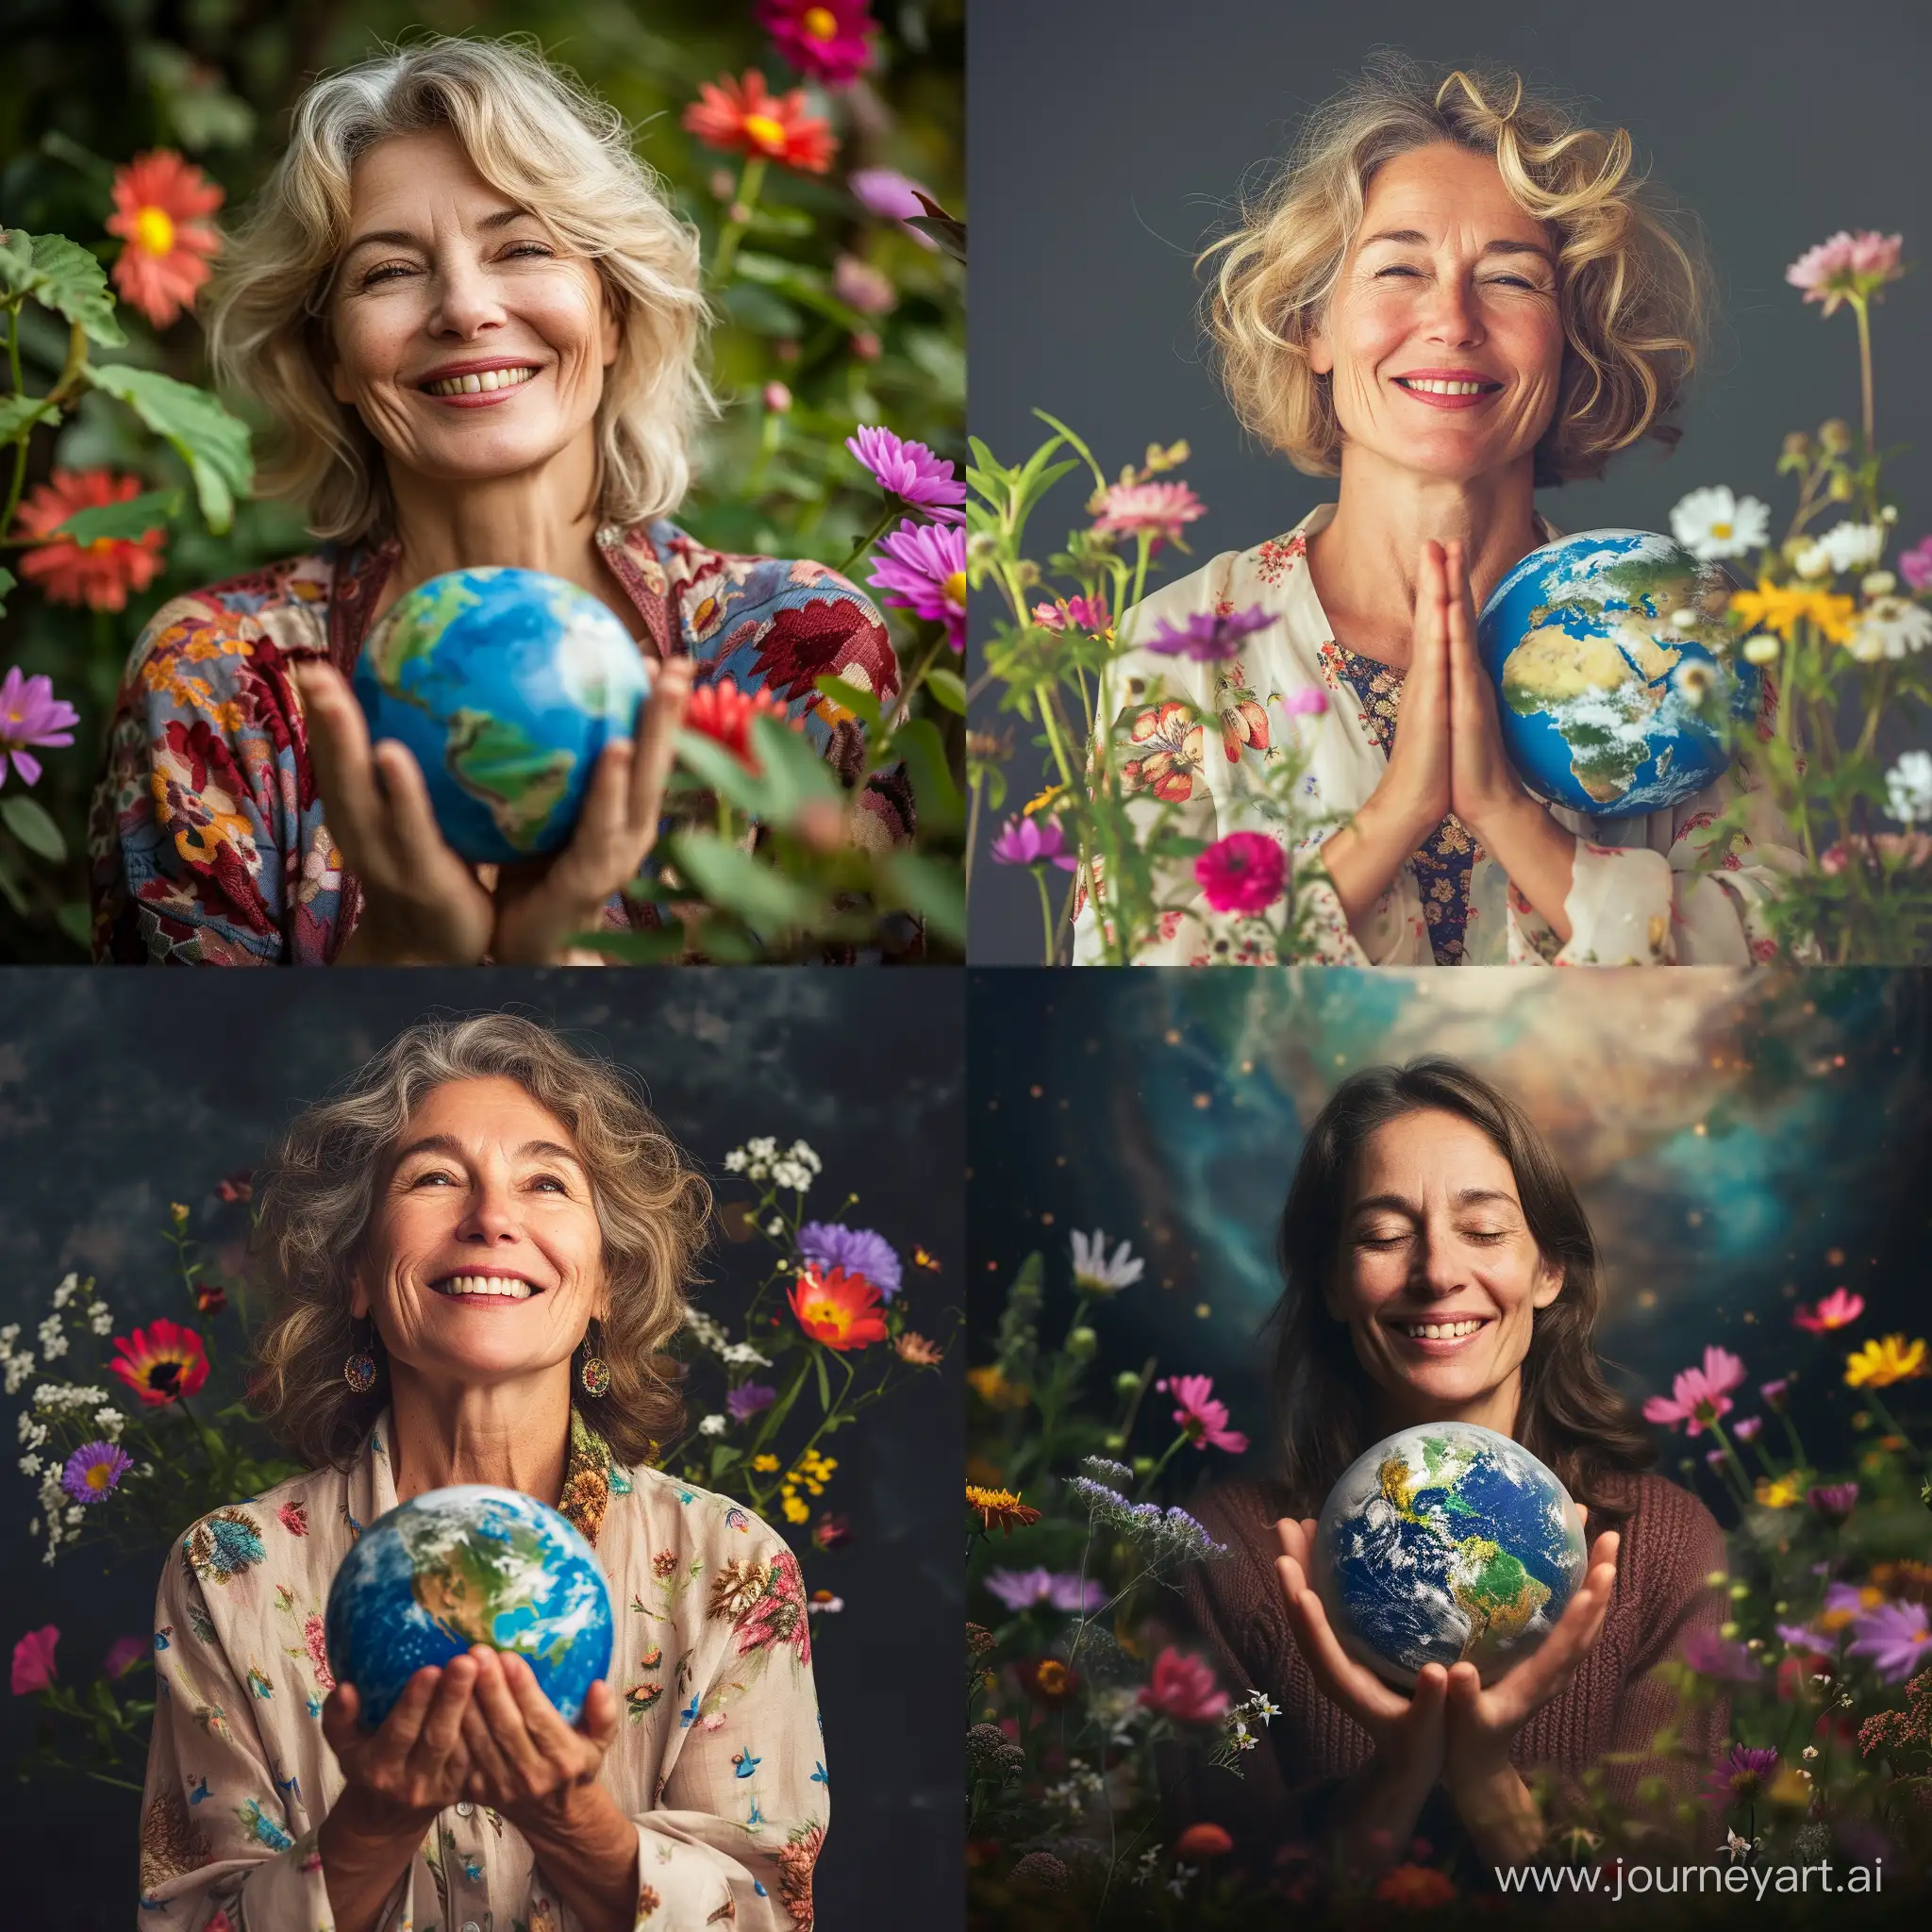 Joyful-Woman-Embracing-Earth-with-Flowers-and-Cosmic-Love